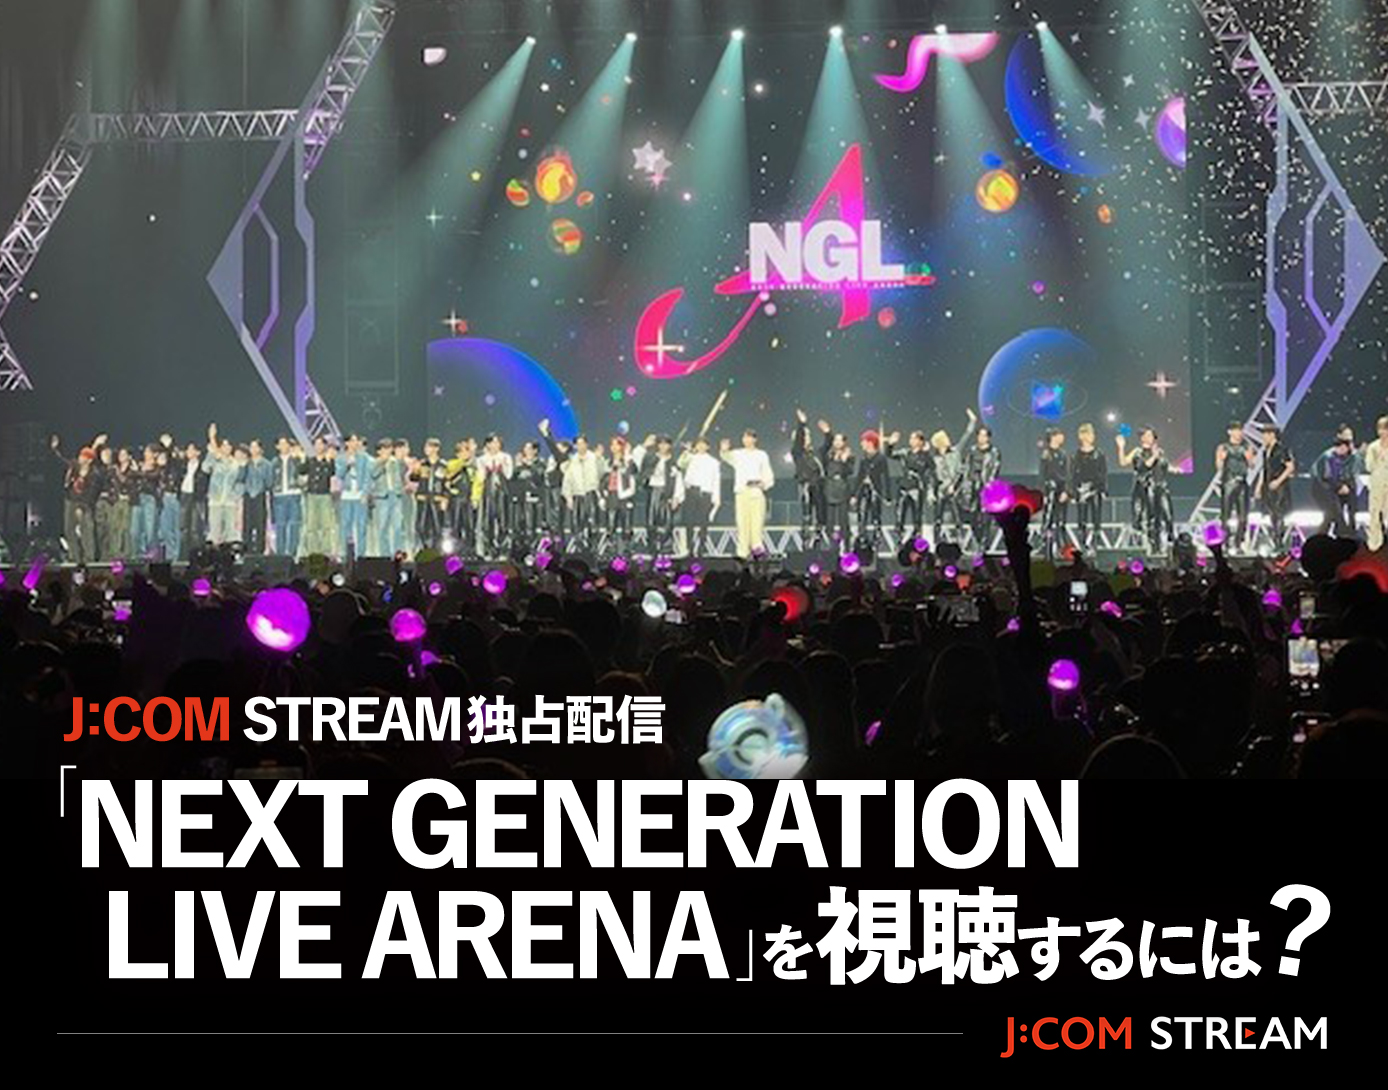 J:COM STREAM独占配信「NEXT GENERATION LIVE ARENA」を視聴するには？